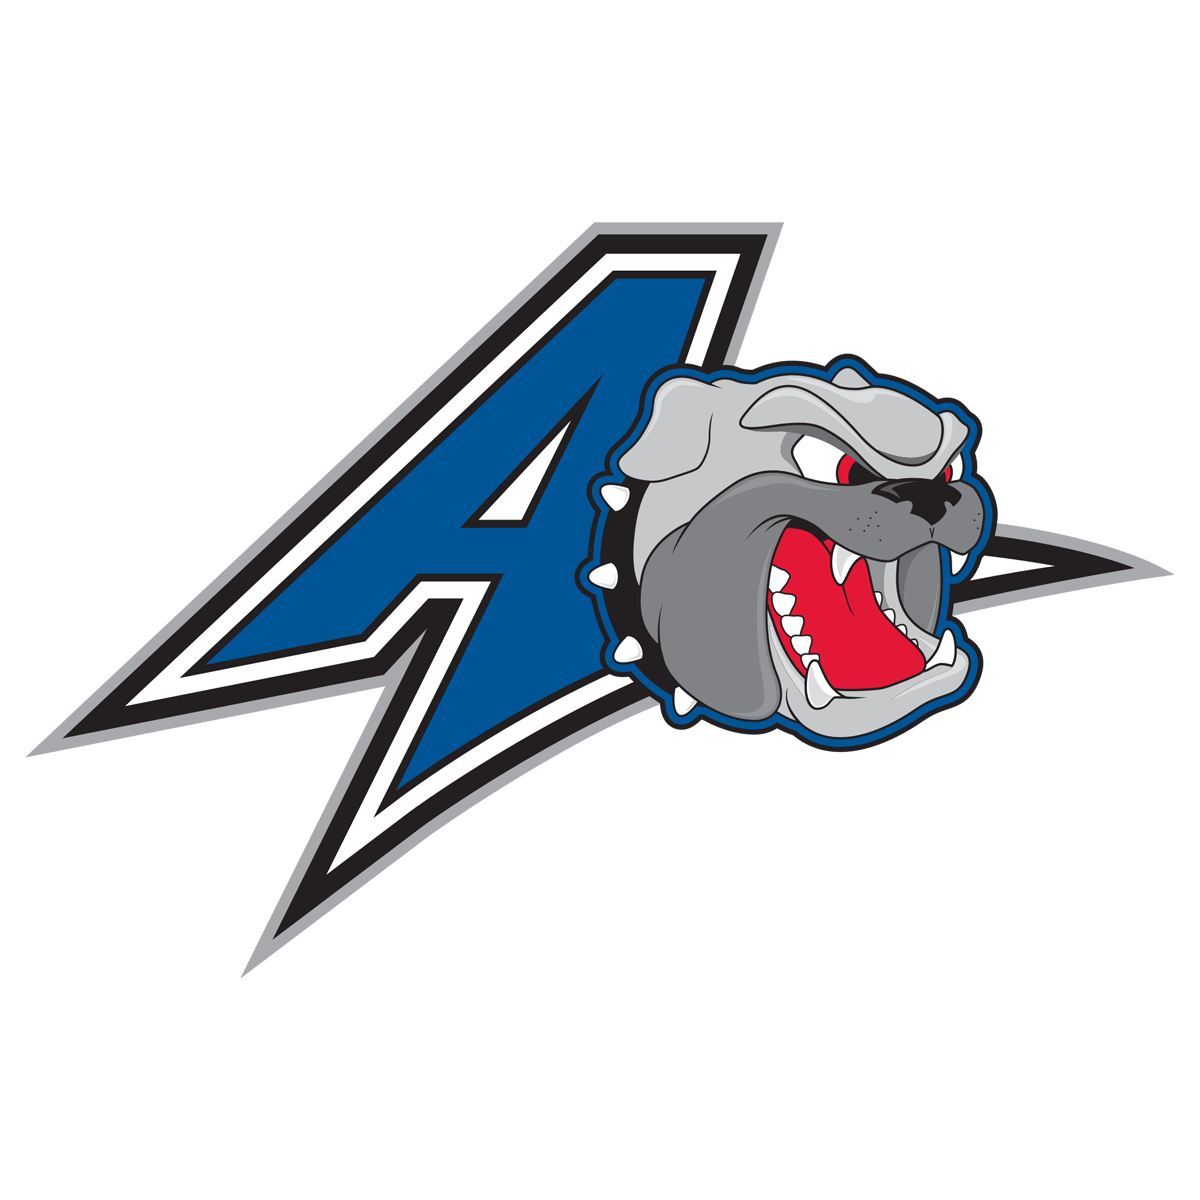 UNC Asheville Bulldogs logo PNG